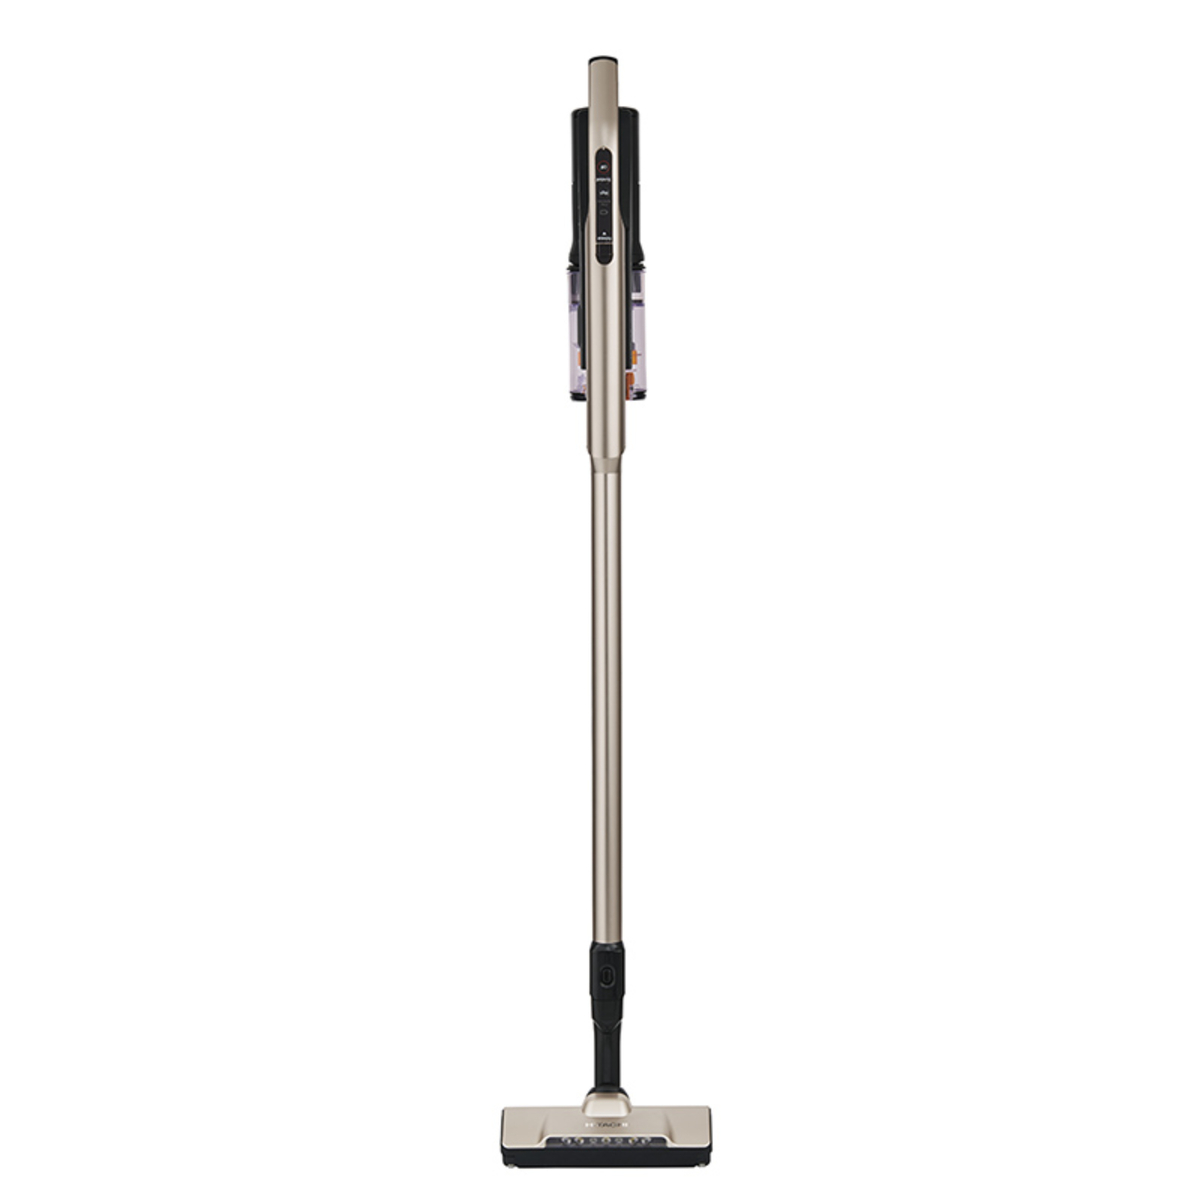 Hitachi Cordless Stick Vacuum Cleaner, Champagne Gold, PV-XL2K